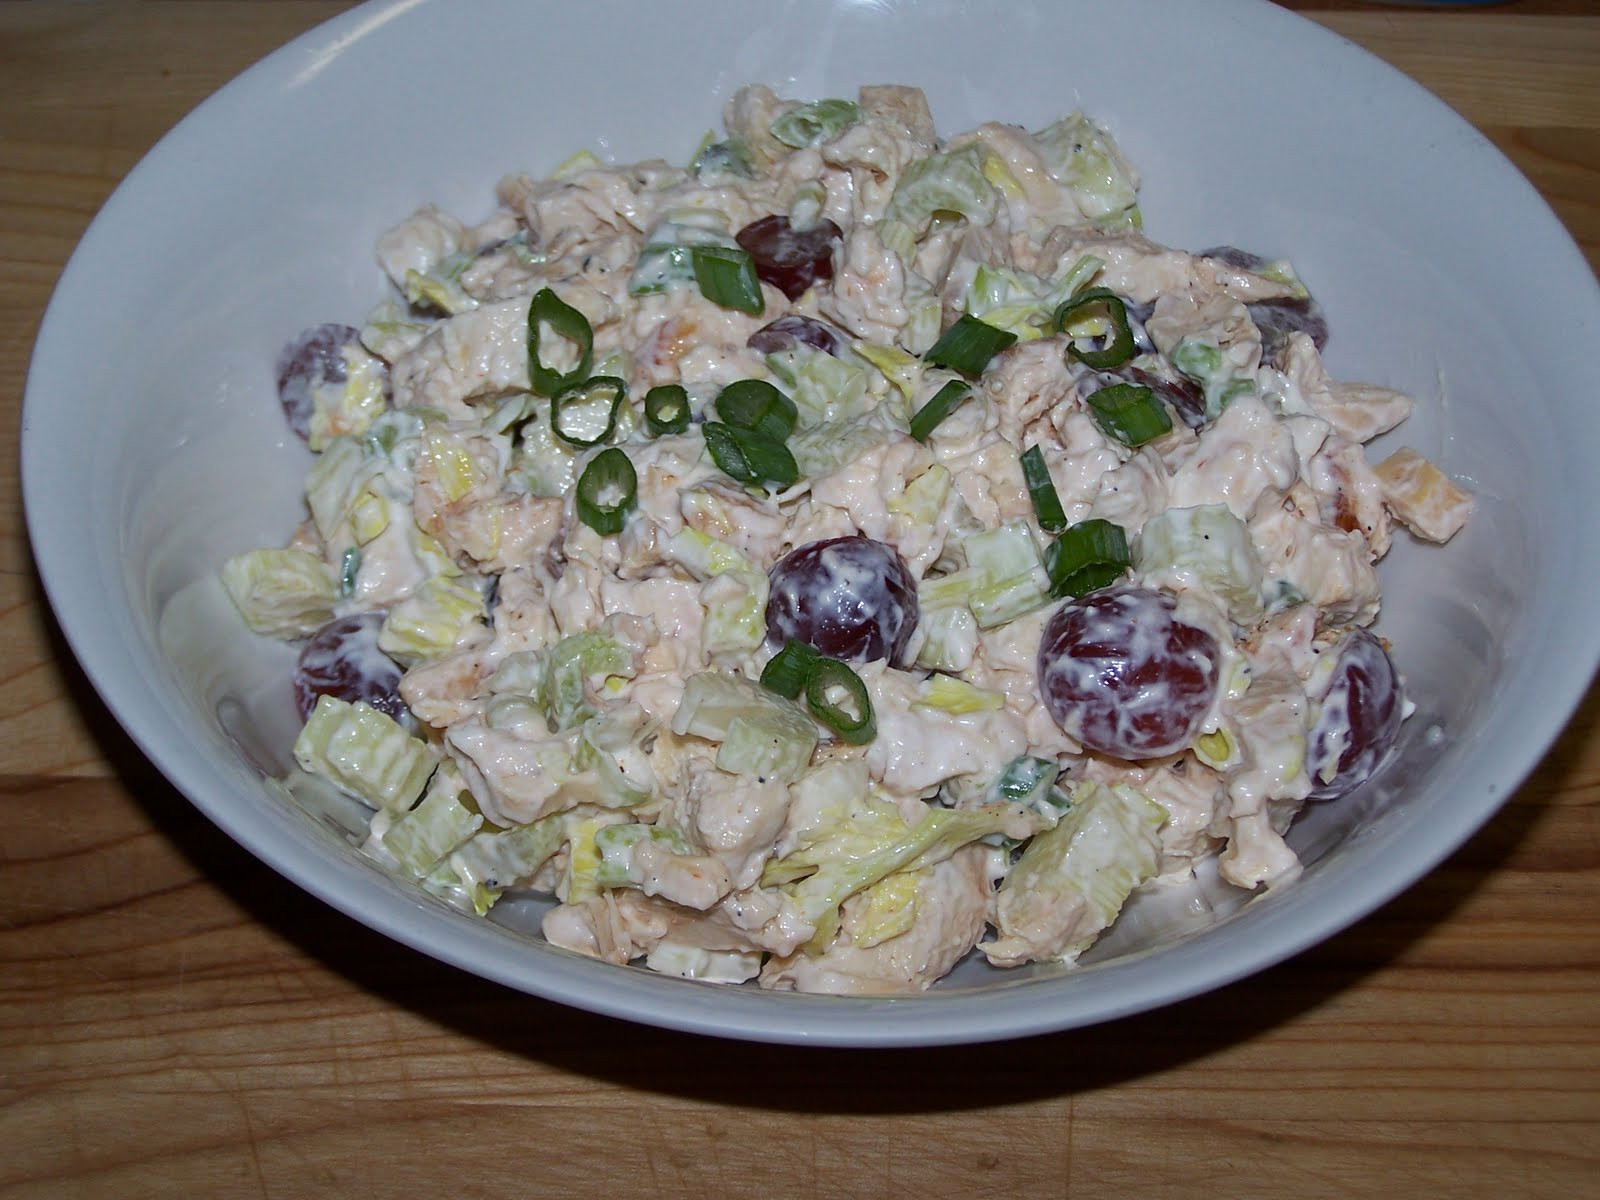 Easy Chicken Salad Recipe With Grapes
 EZ Gluten Free Chicken Salad with Grapes